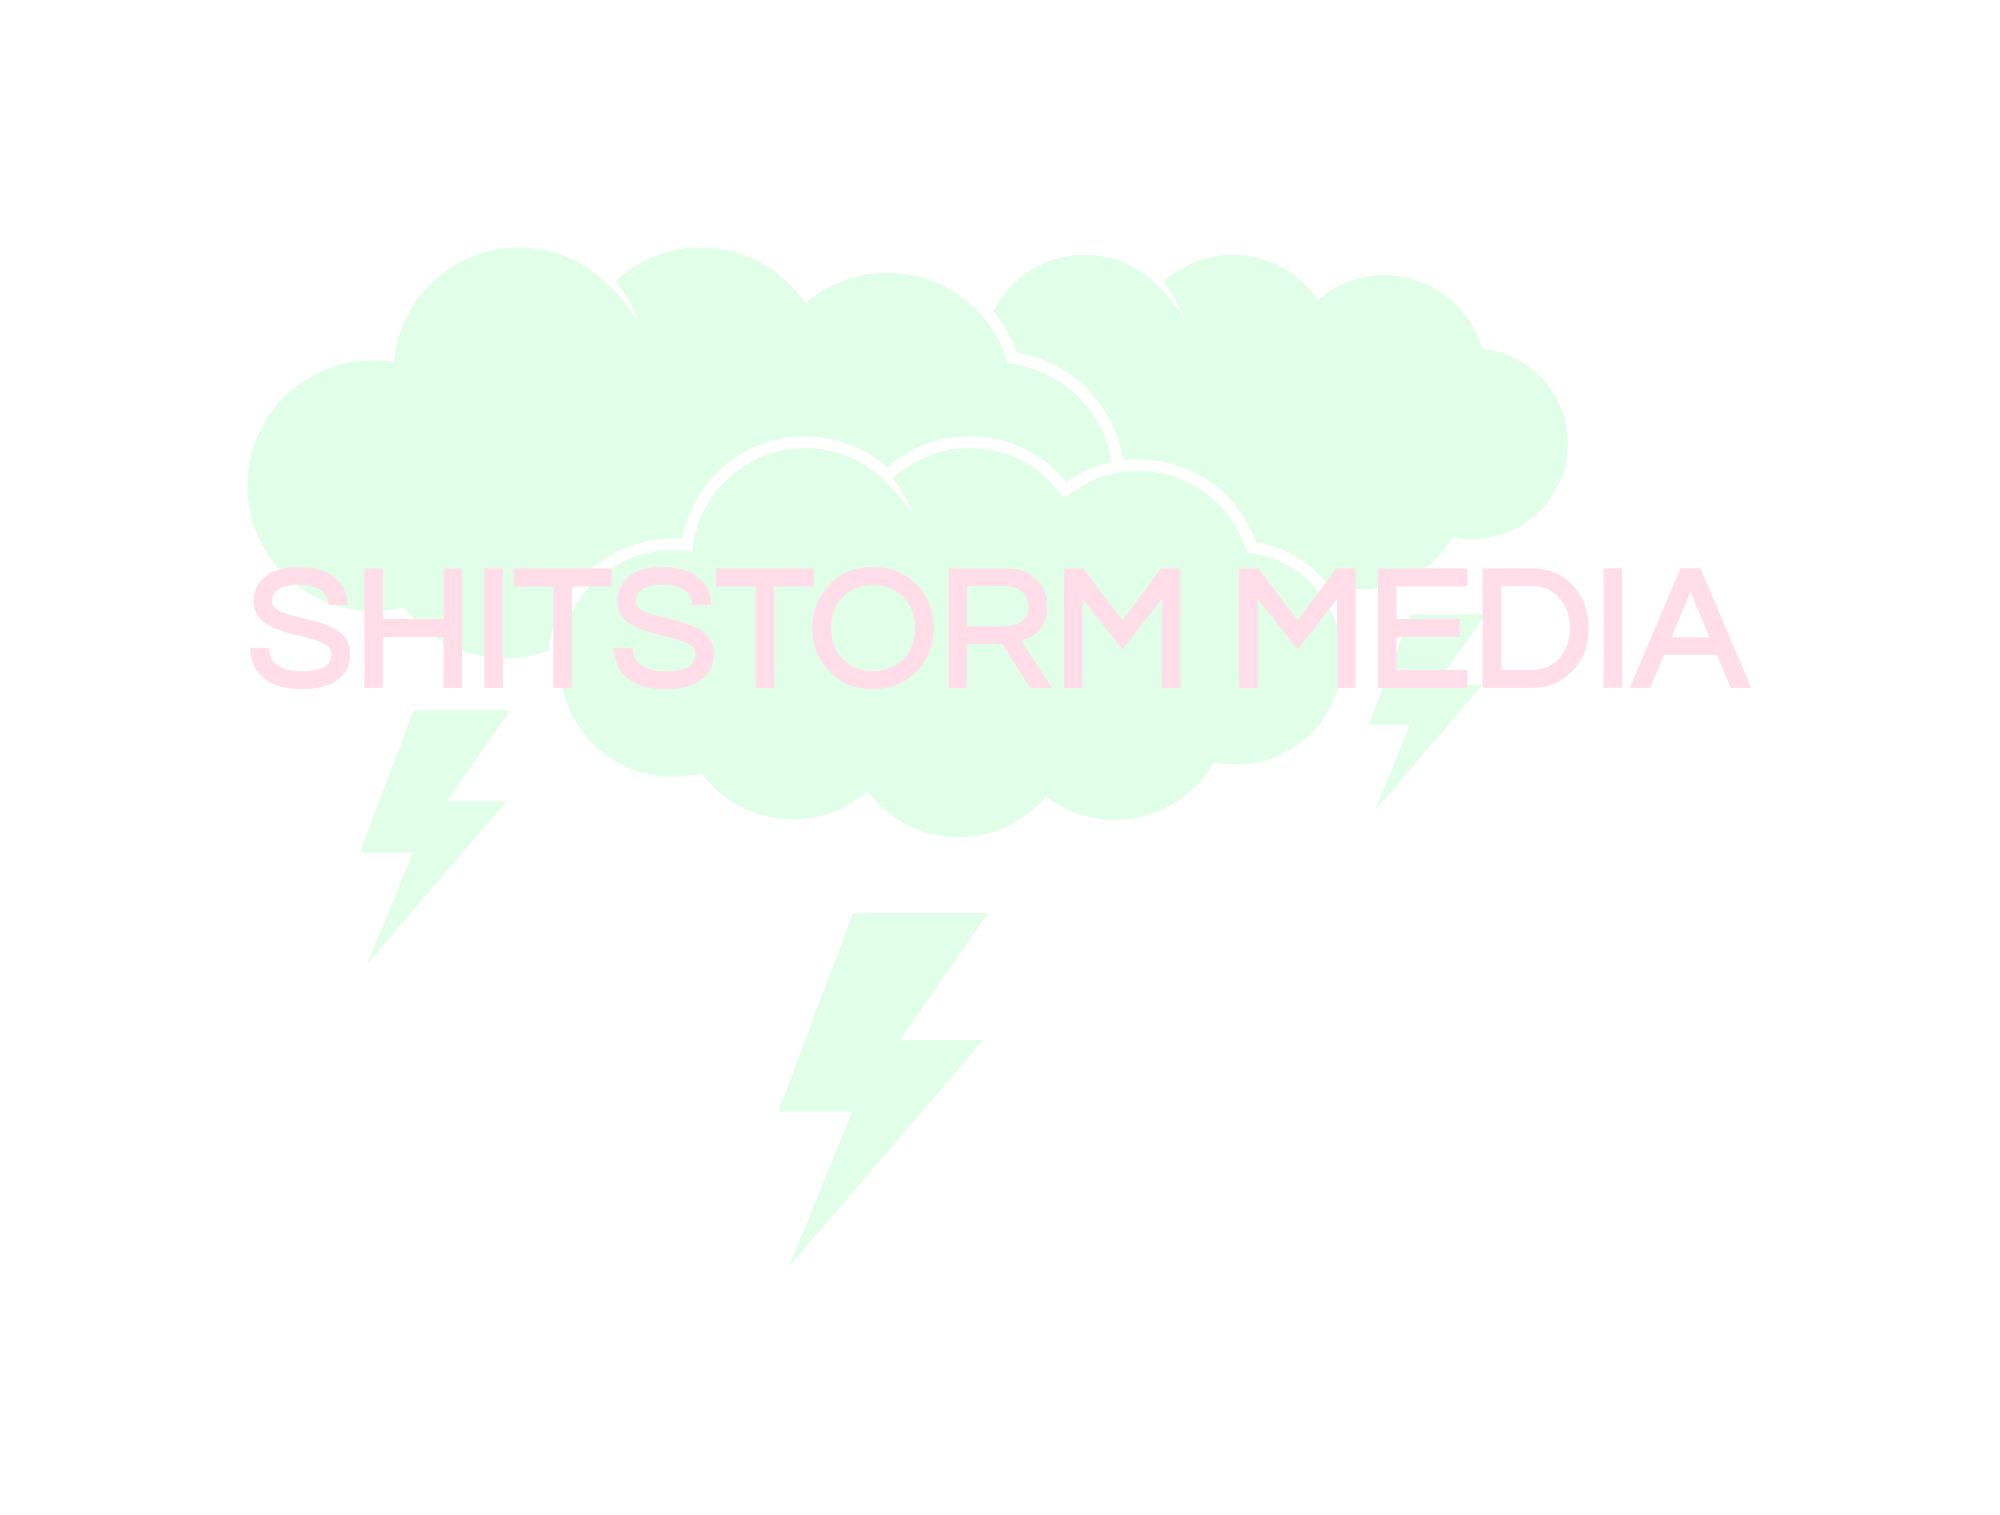 SHITSTORM MEDIA (Copy)